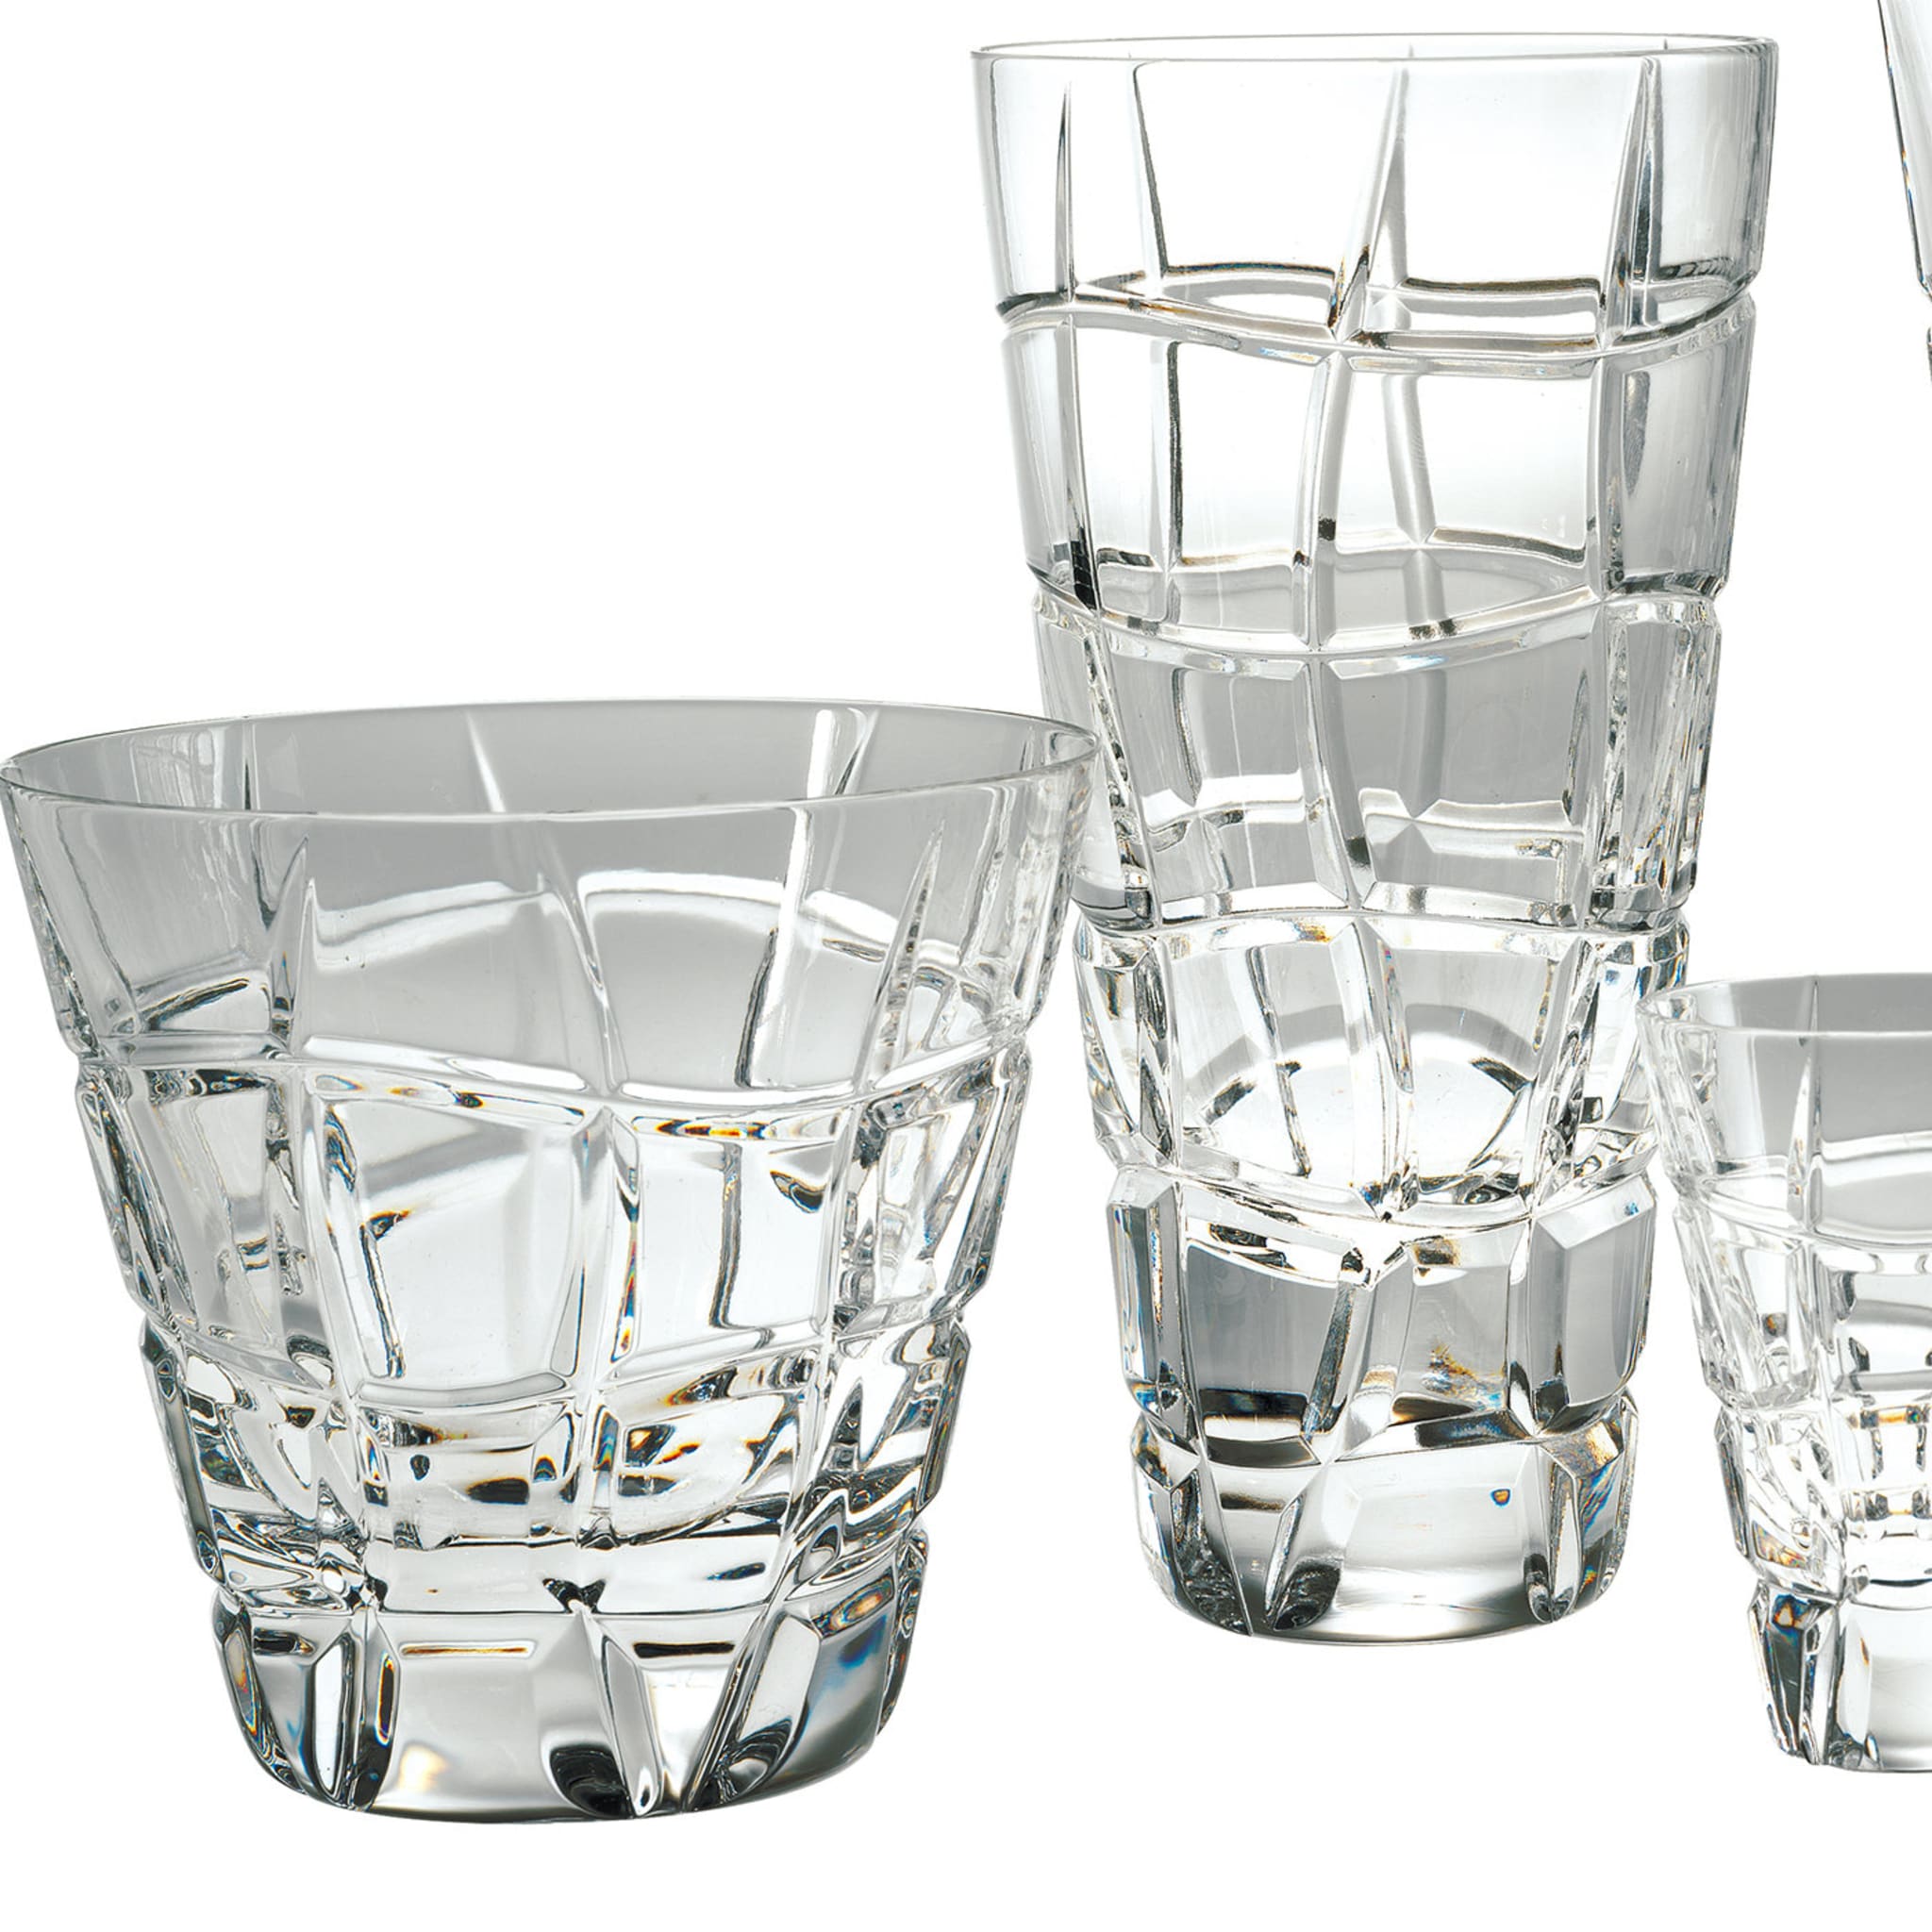 Tondo Doni Landmark Set of 6 Liquor Glasses - Alternative view 1